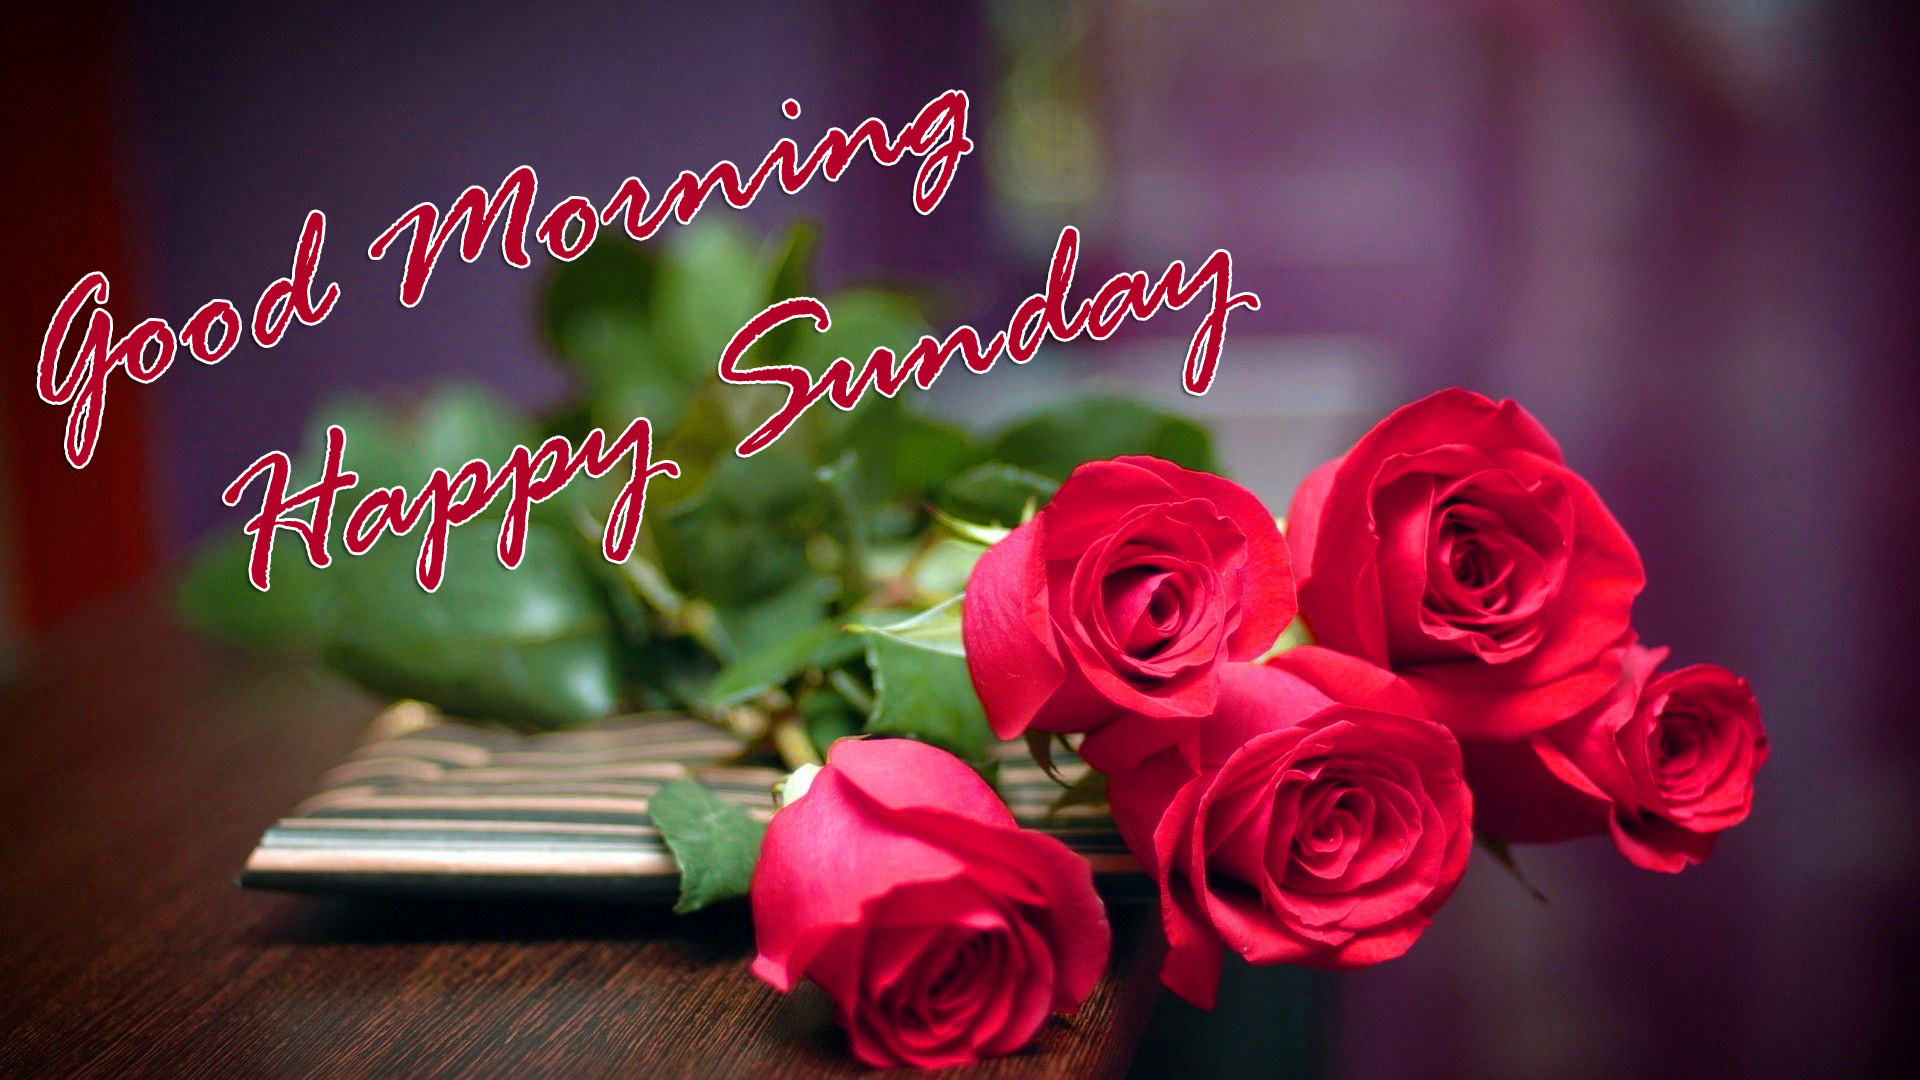 sunday good morning wallpaper,pink,text,garden roses,red,flower